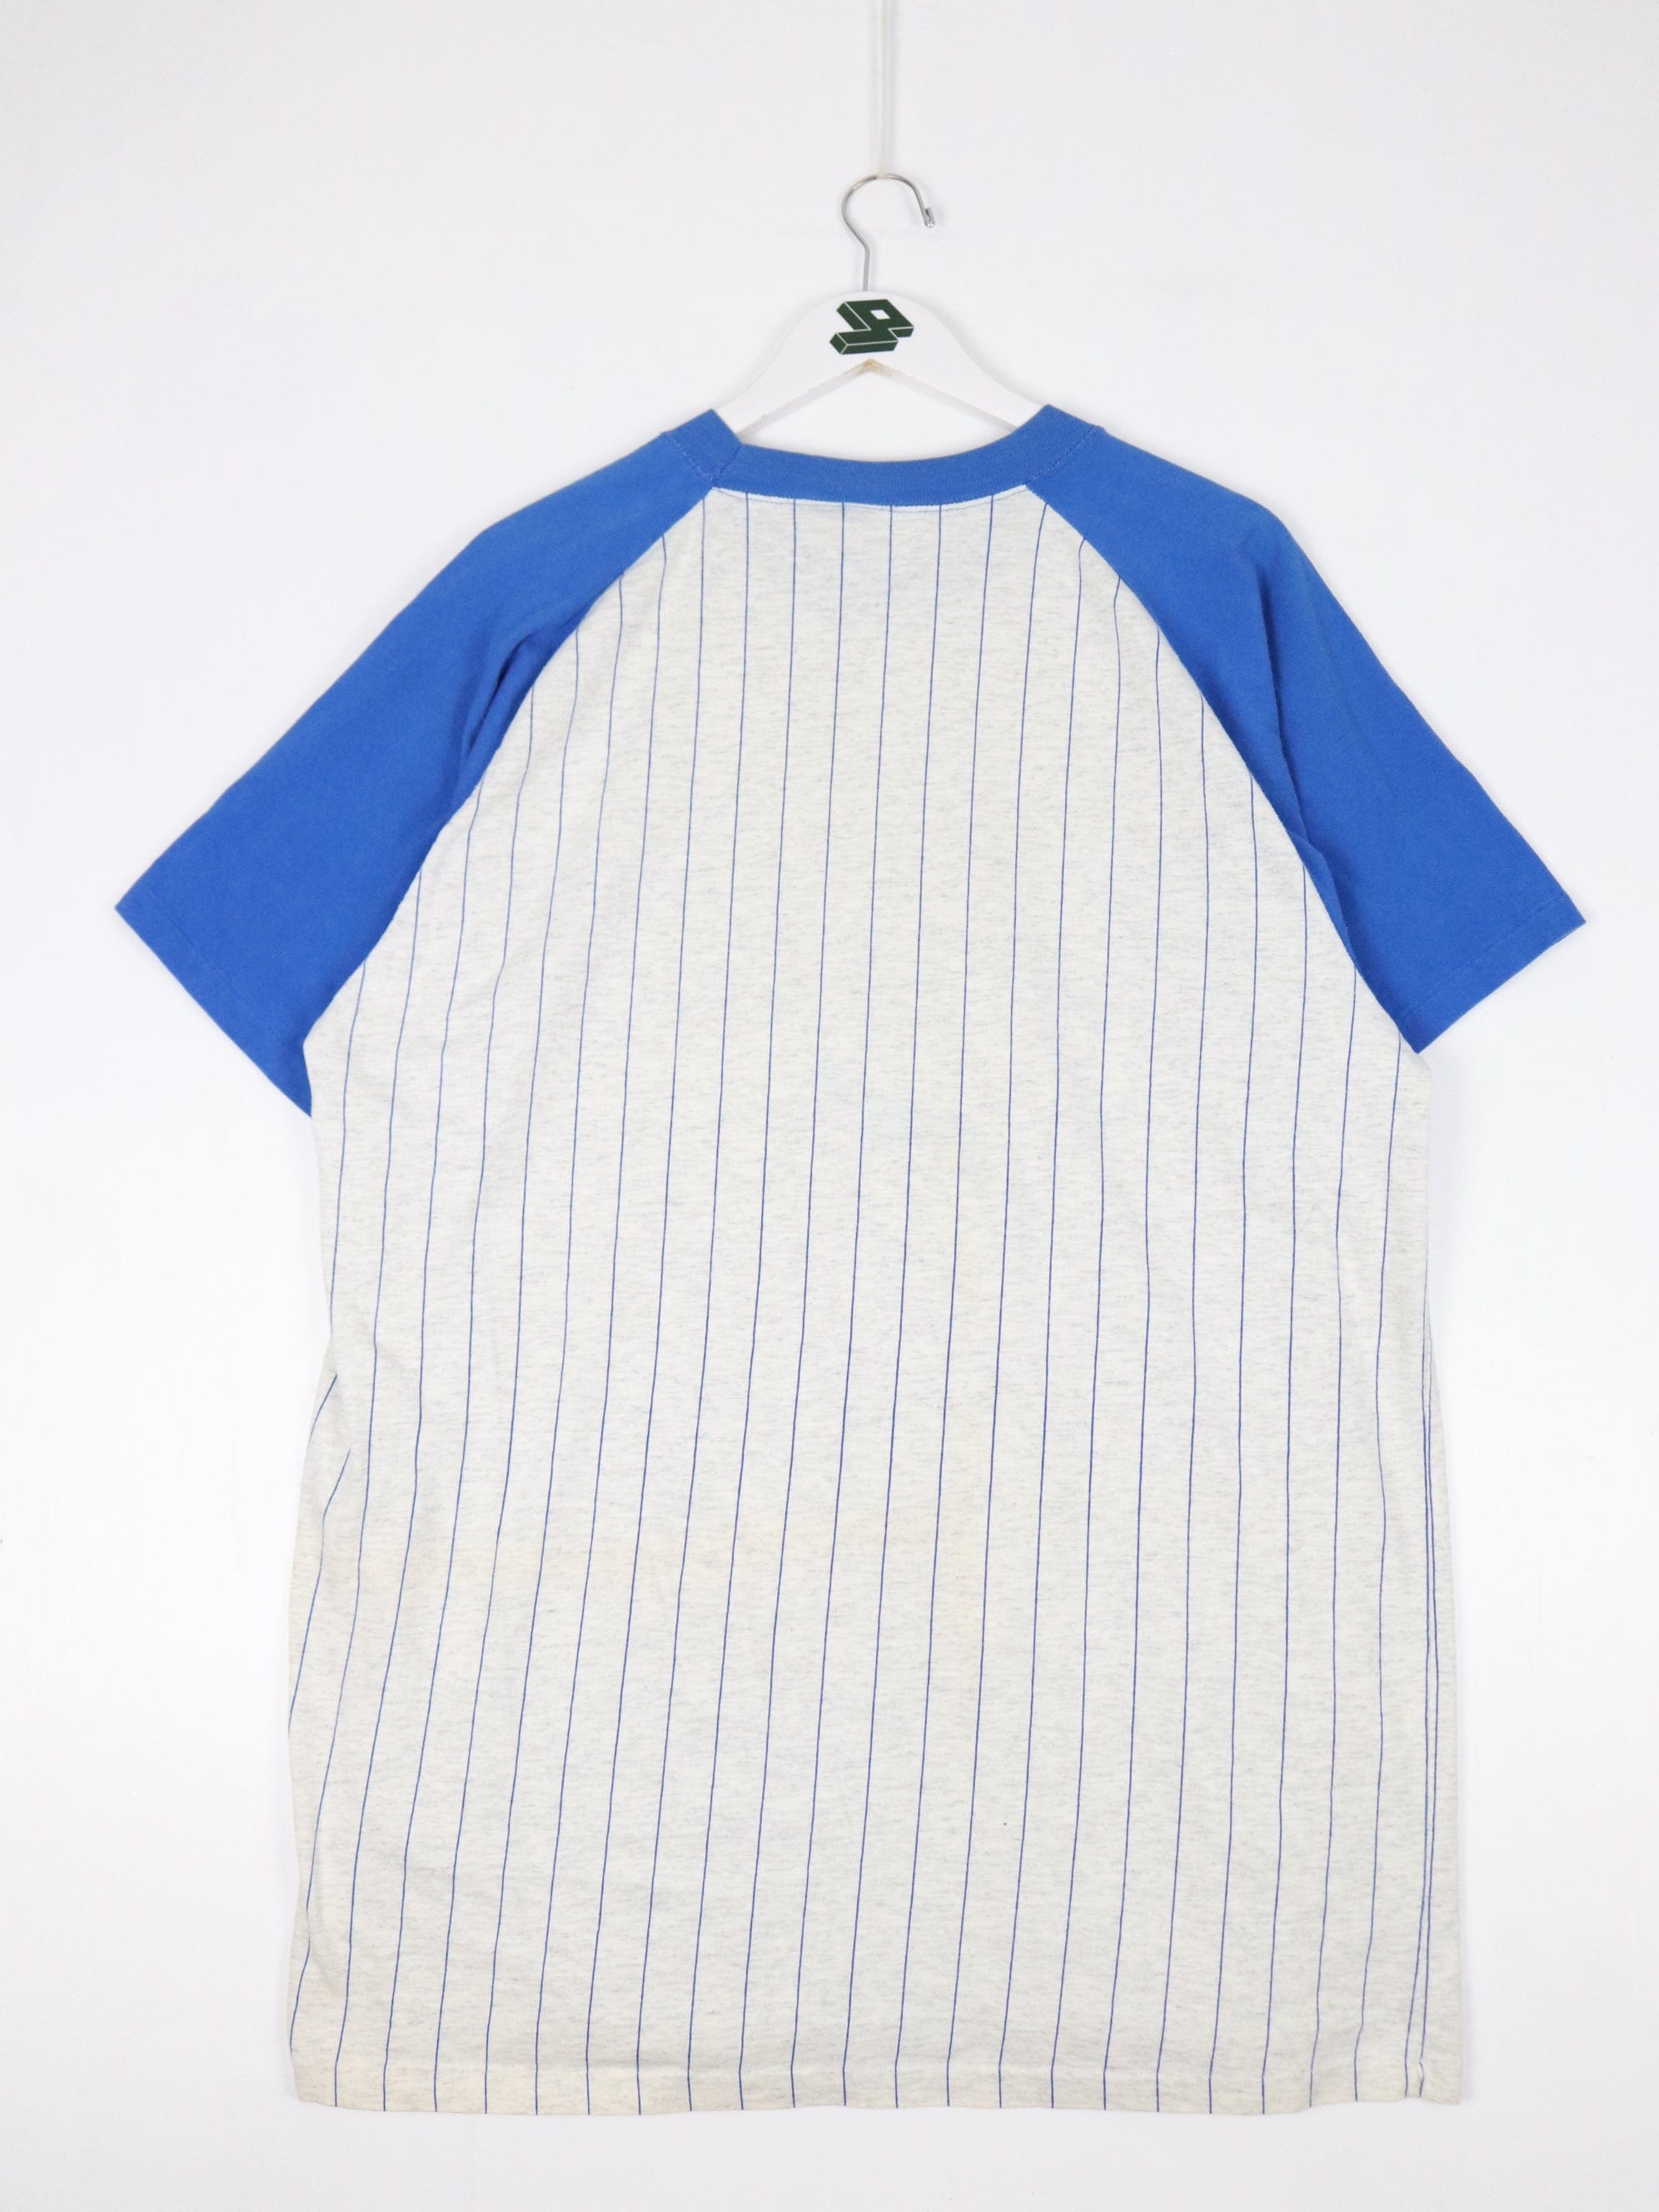 MLB Men's Shirt - Blue - L